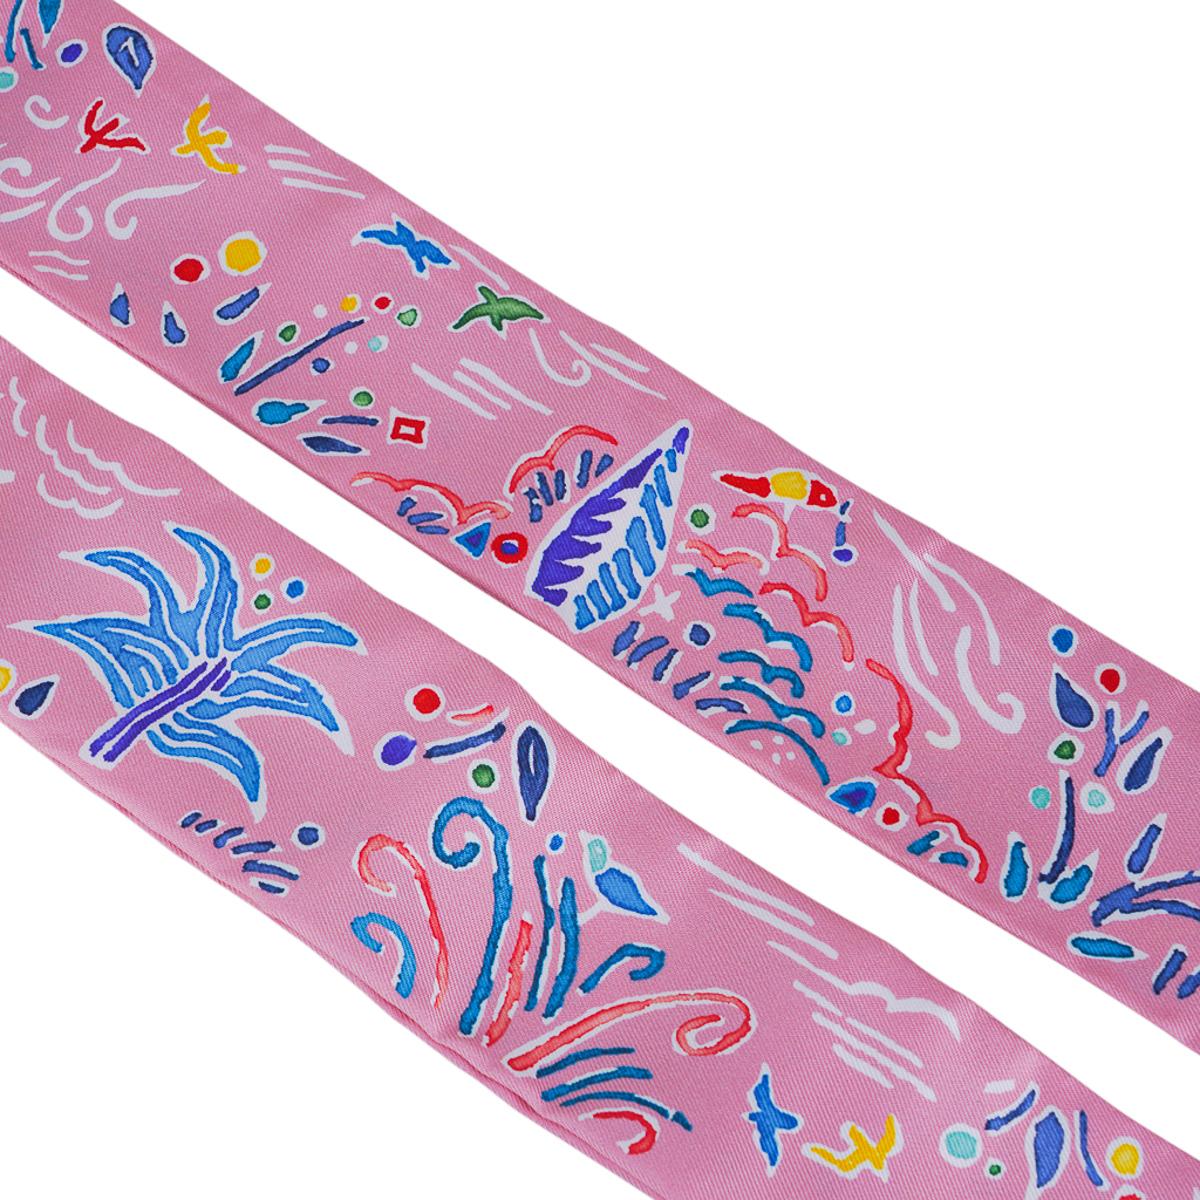 Hermes Twilly Isola di Primavera Rose / Bleu / Multicolore Silk Scarf Set of Two 2